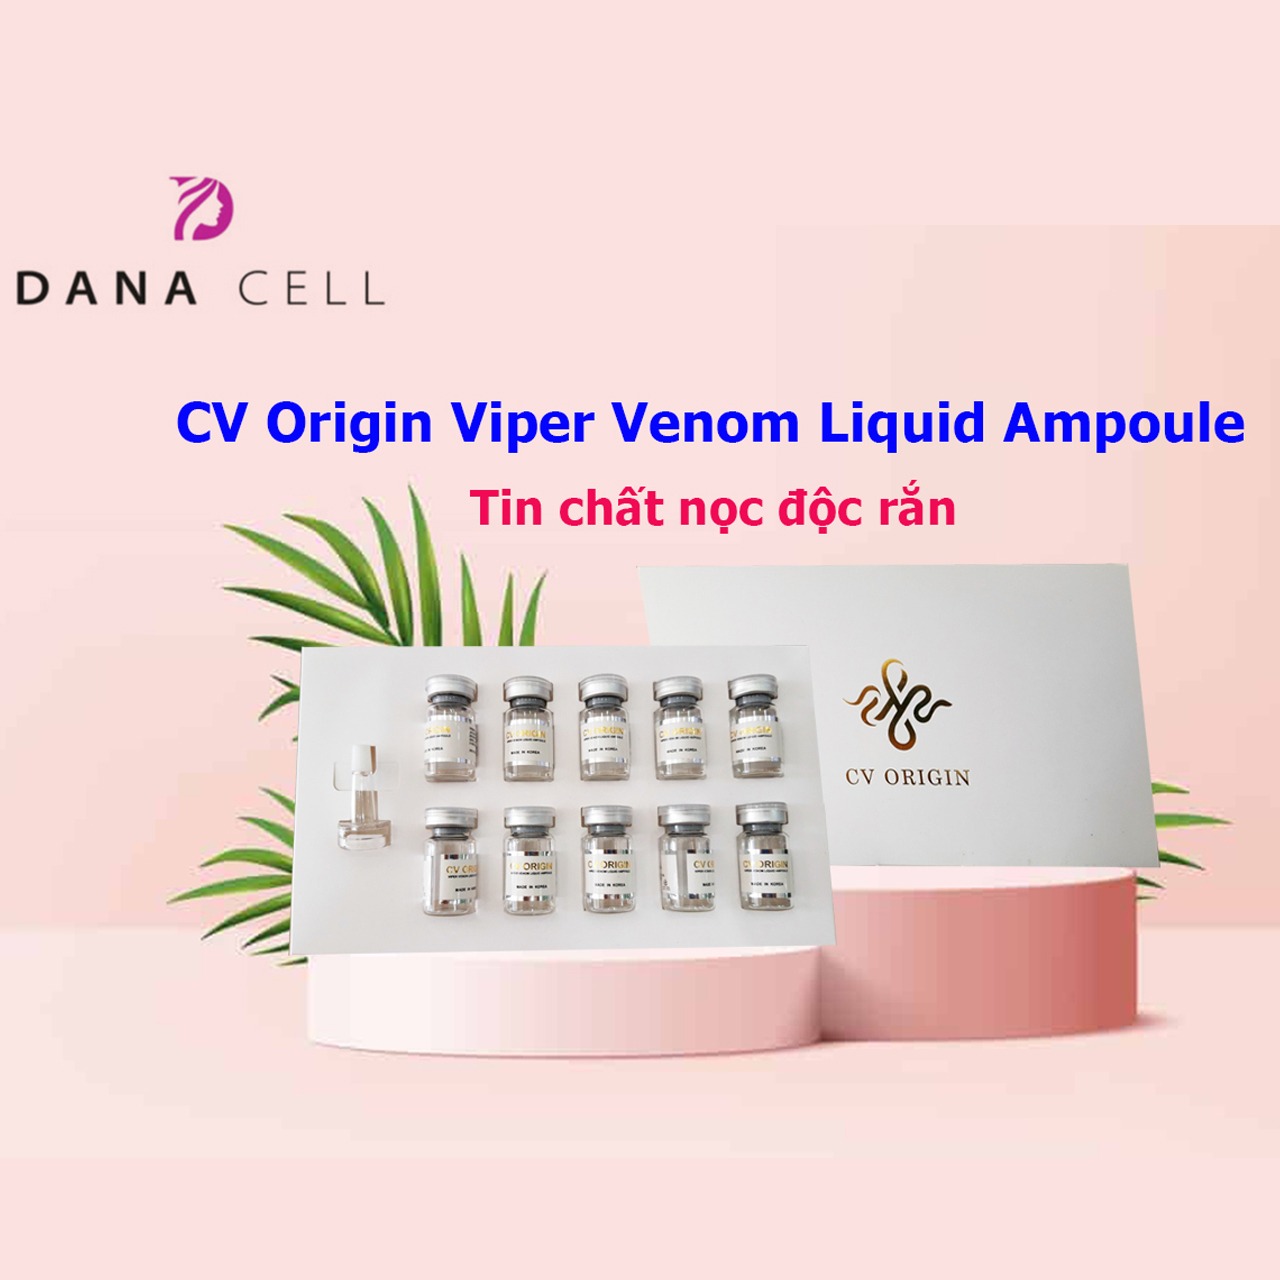 CV Origin Viper Venom Liquid Ampoule